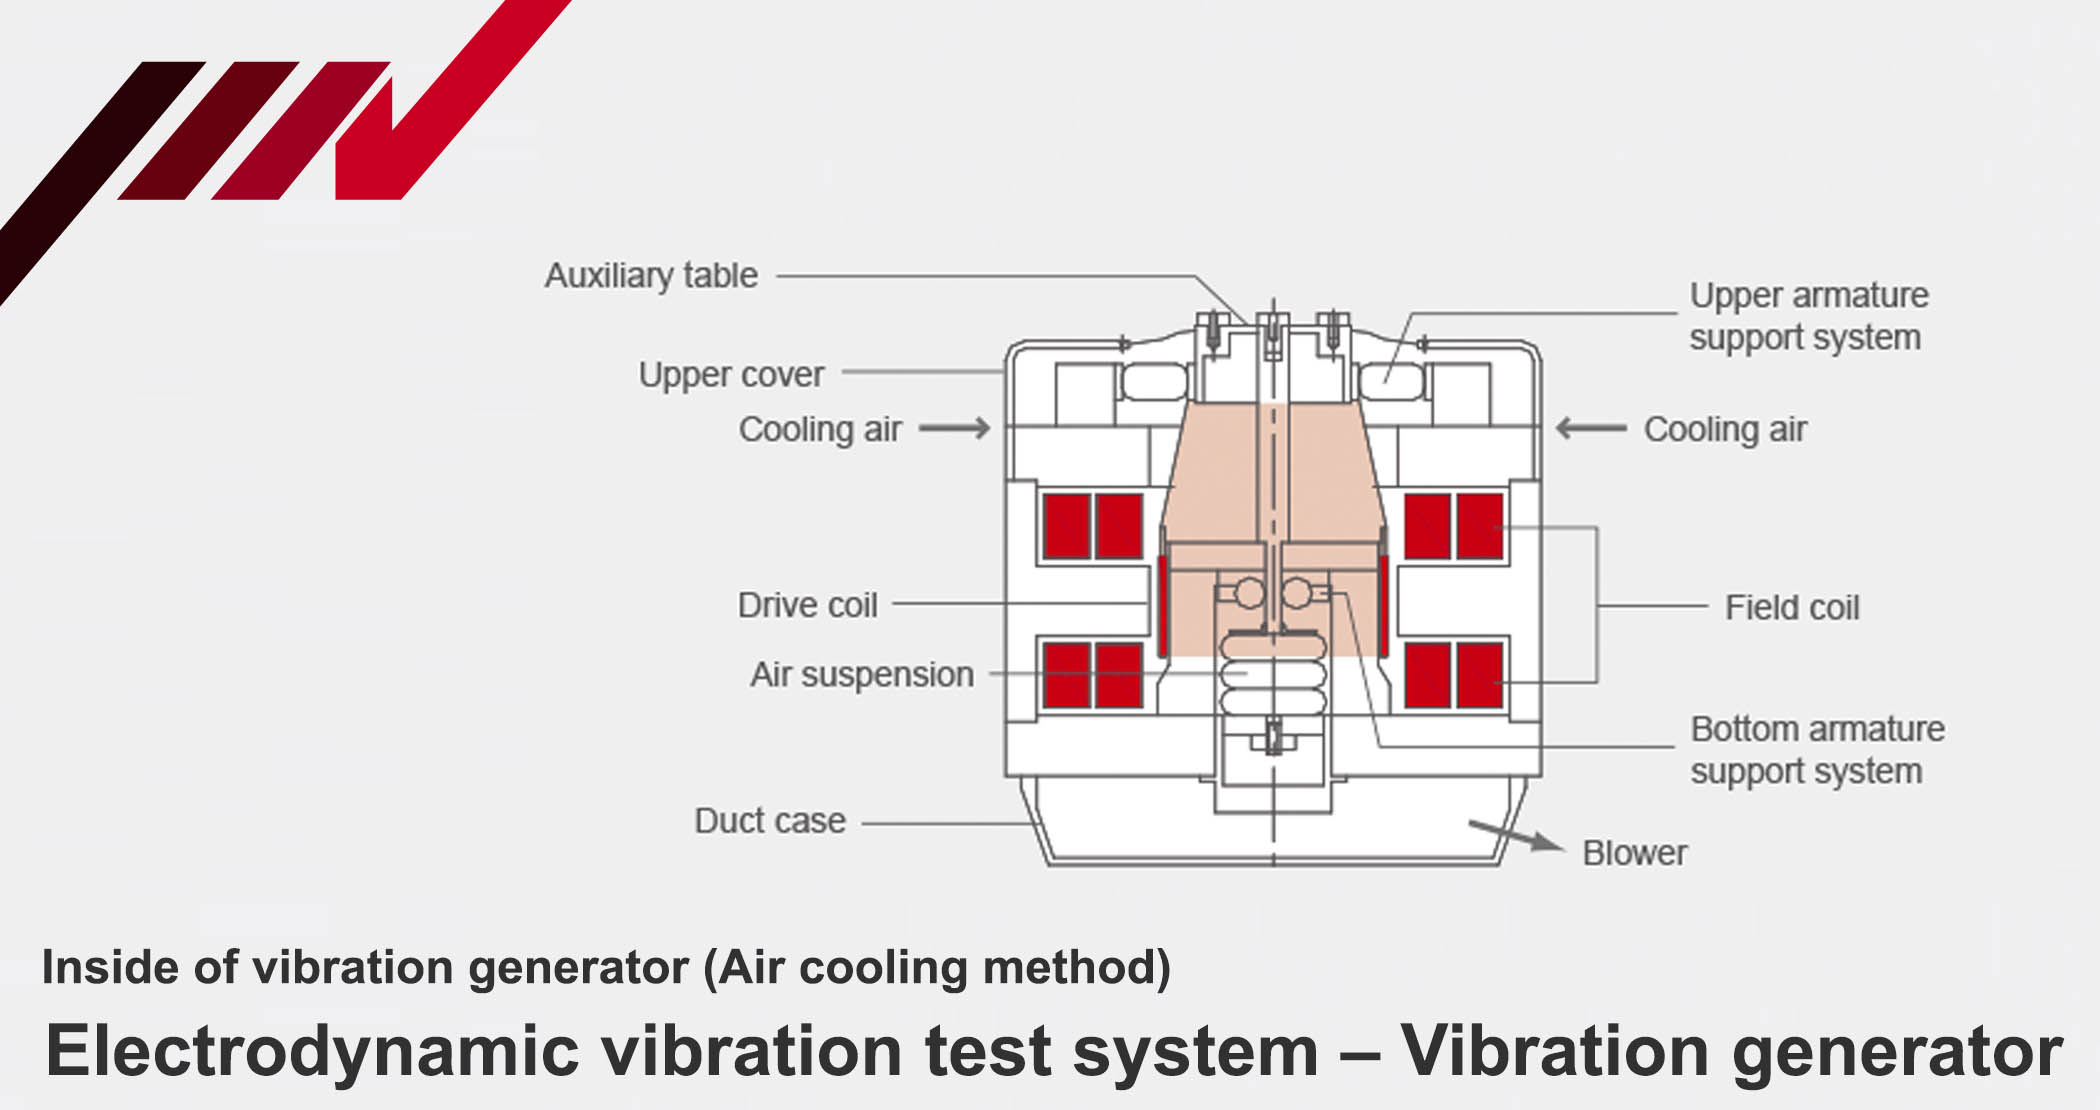 Inside of vibration generator, electrodynamic test system, IMV Corp.